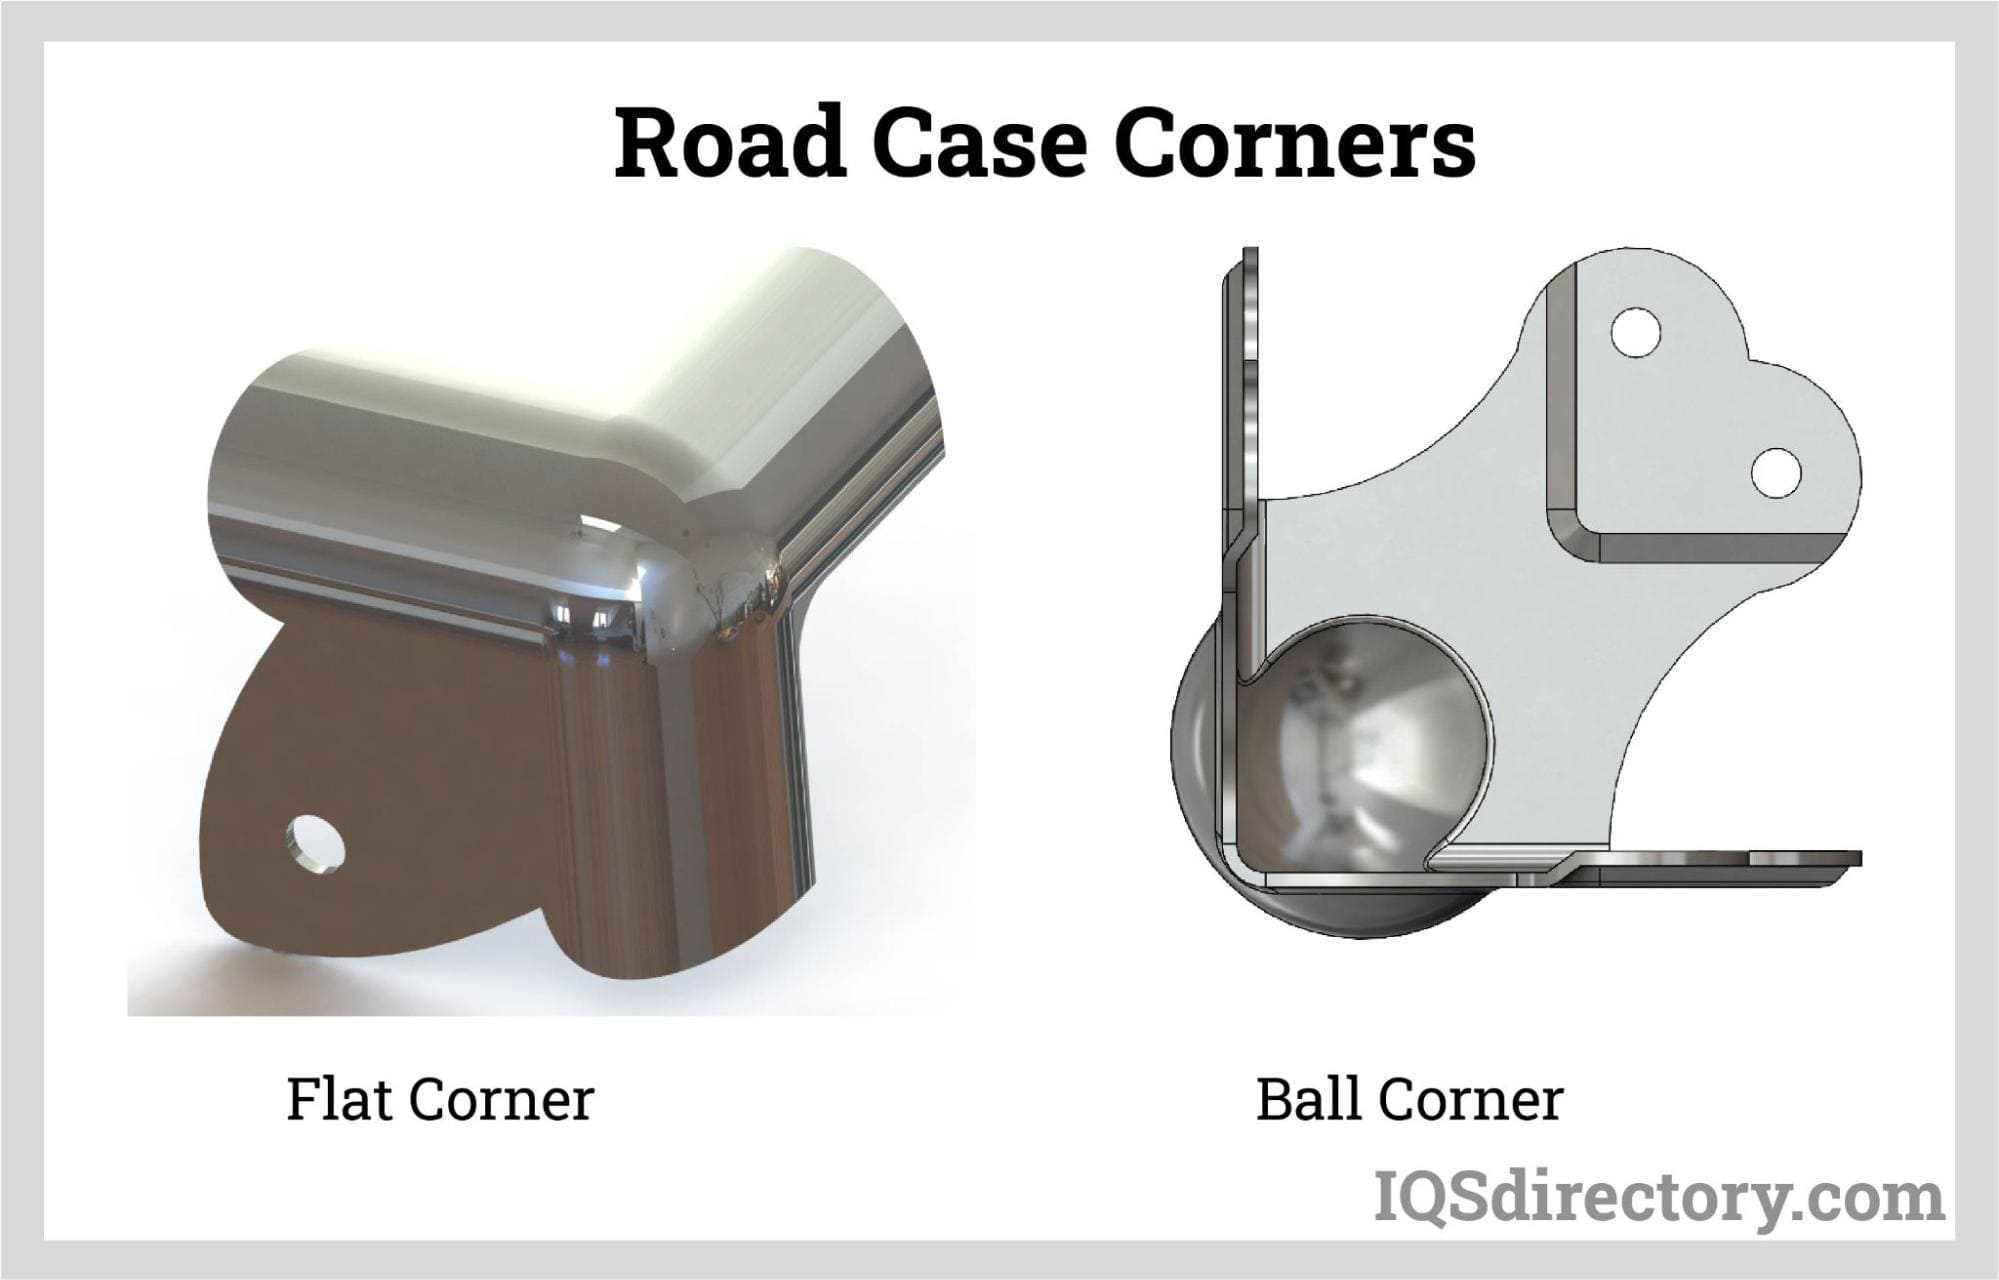 Road Case Corners